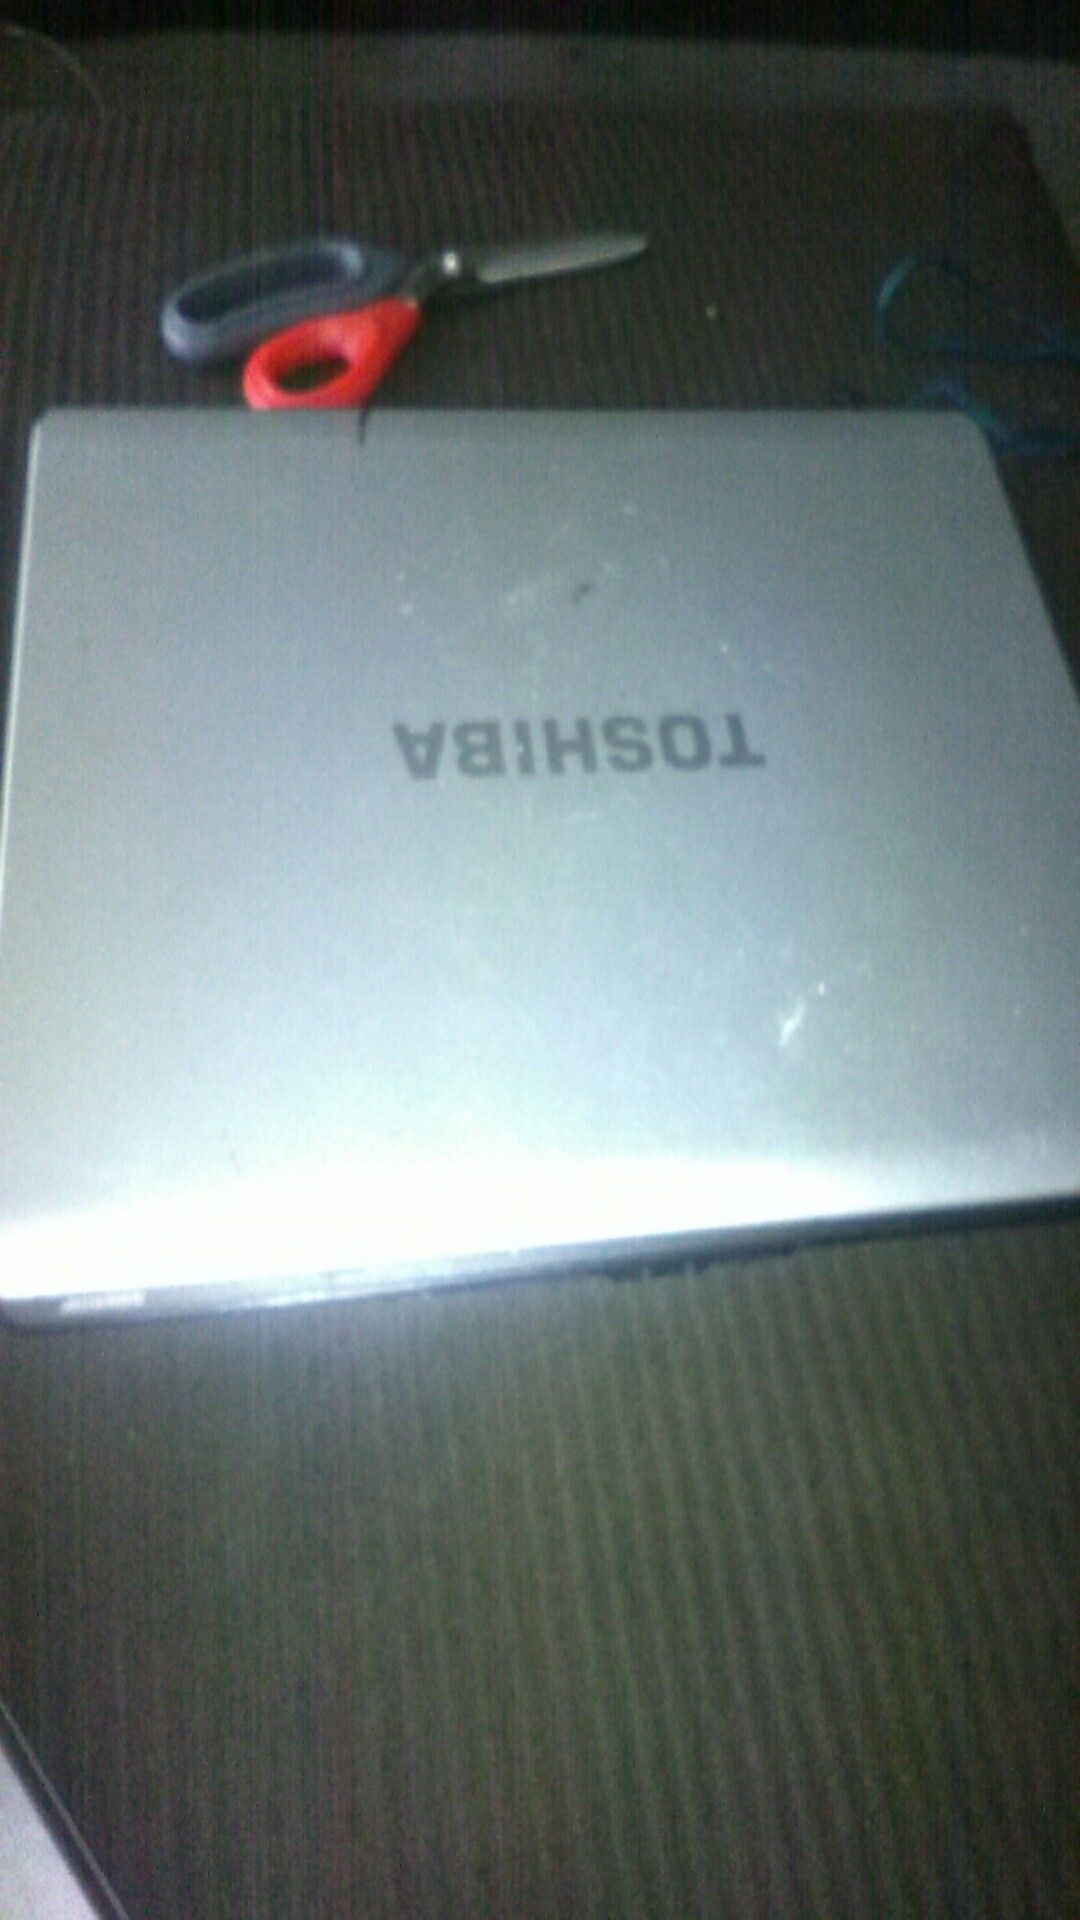 Toshiba Laptop it's Just Need a Hard drive